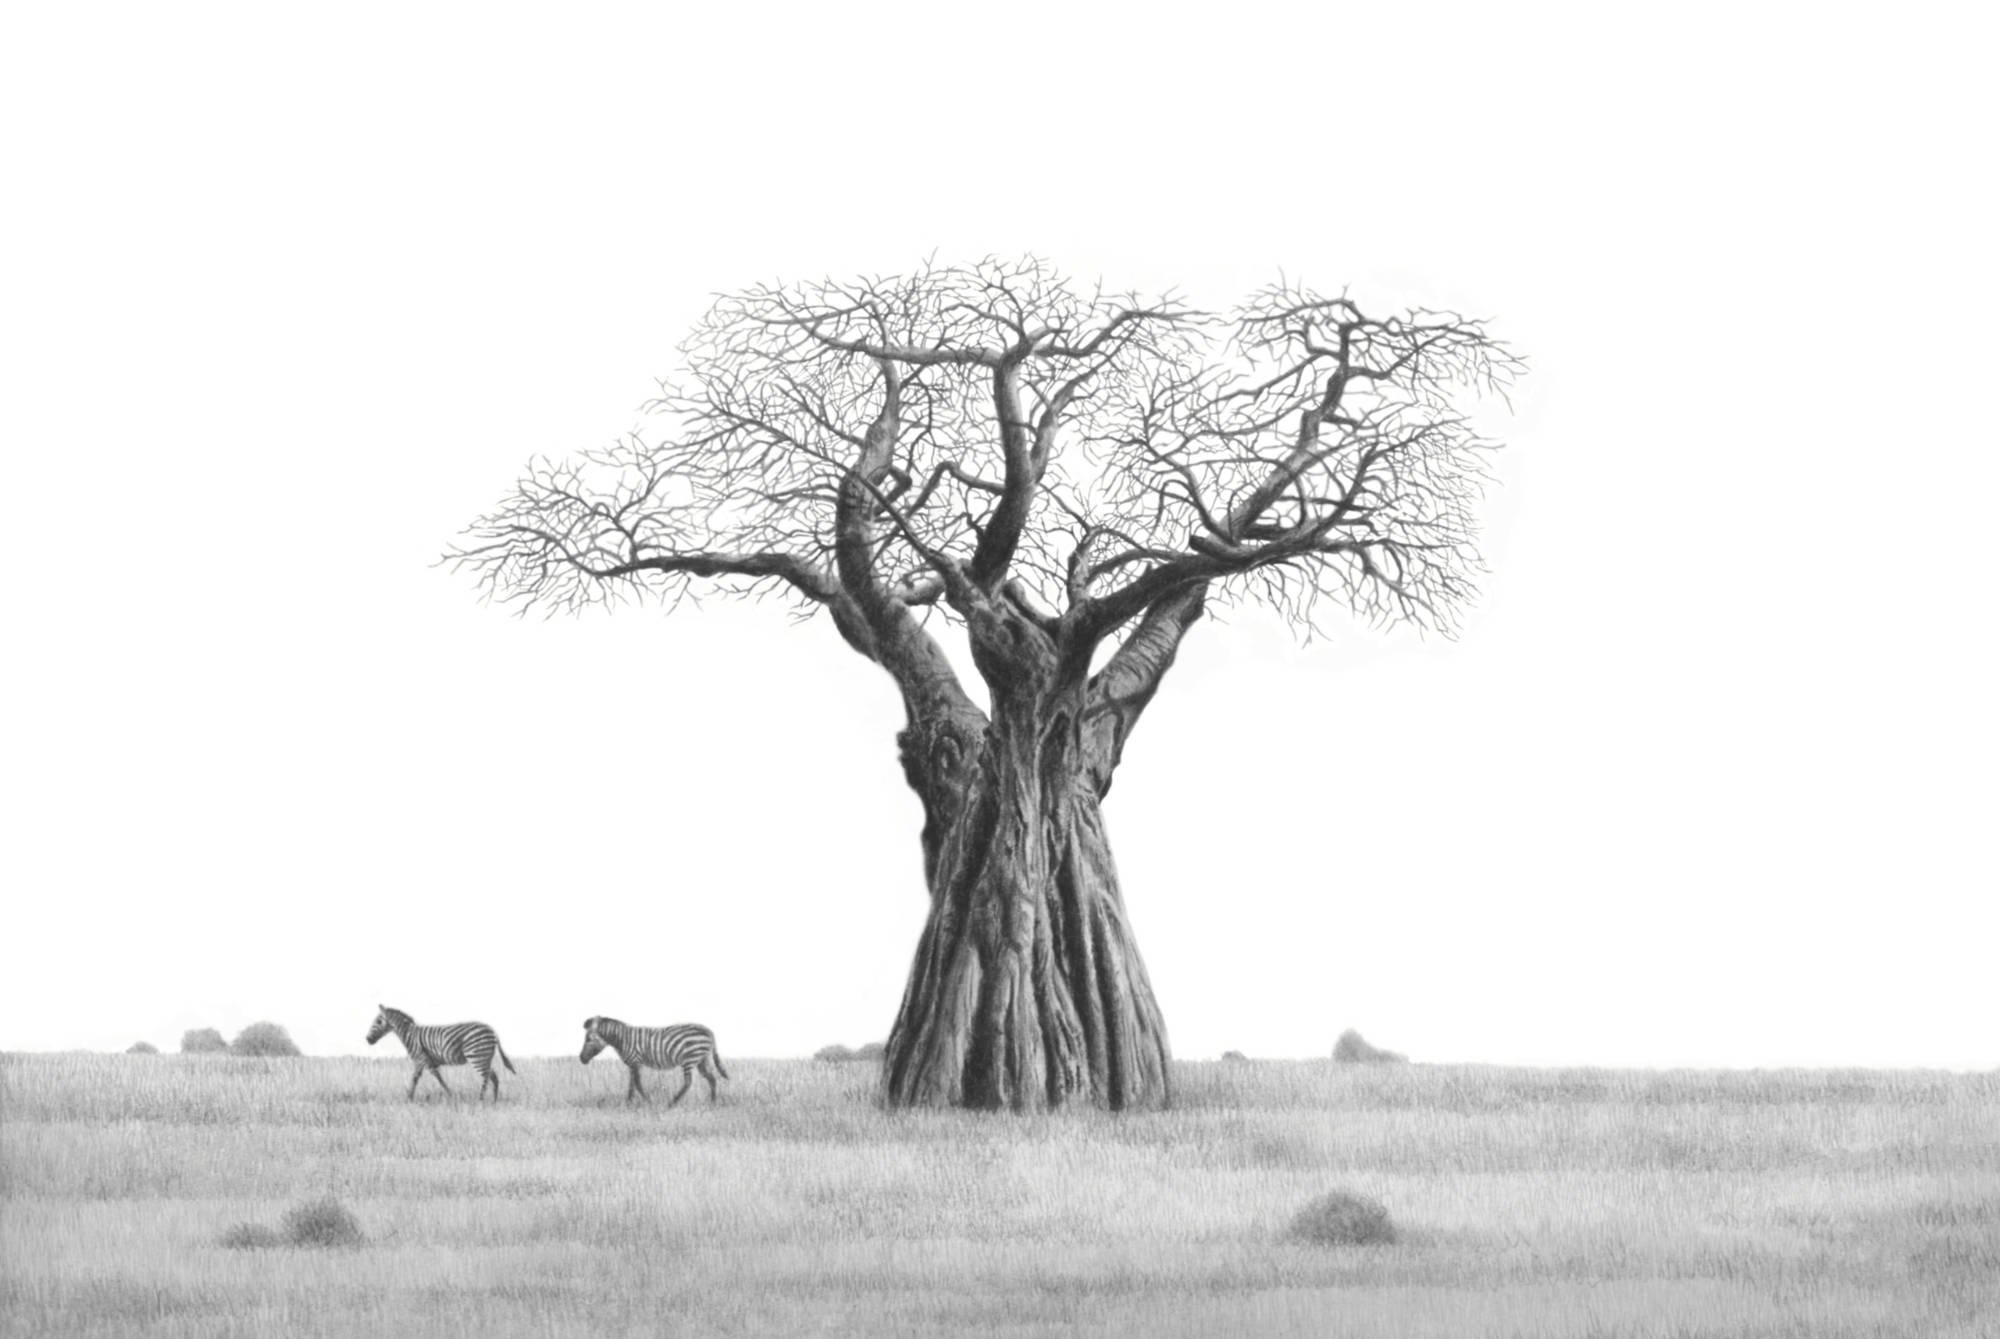 Baobab tree and zebra by Matthew Bell